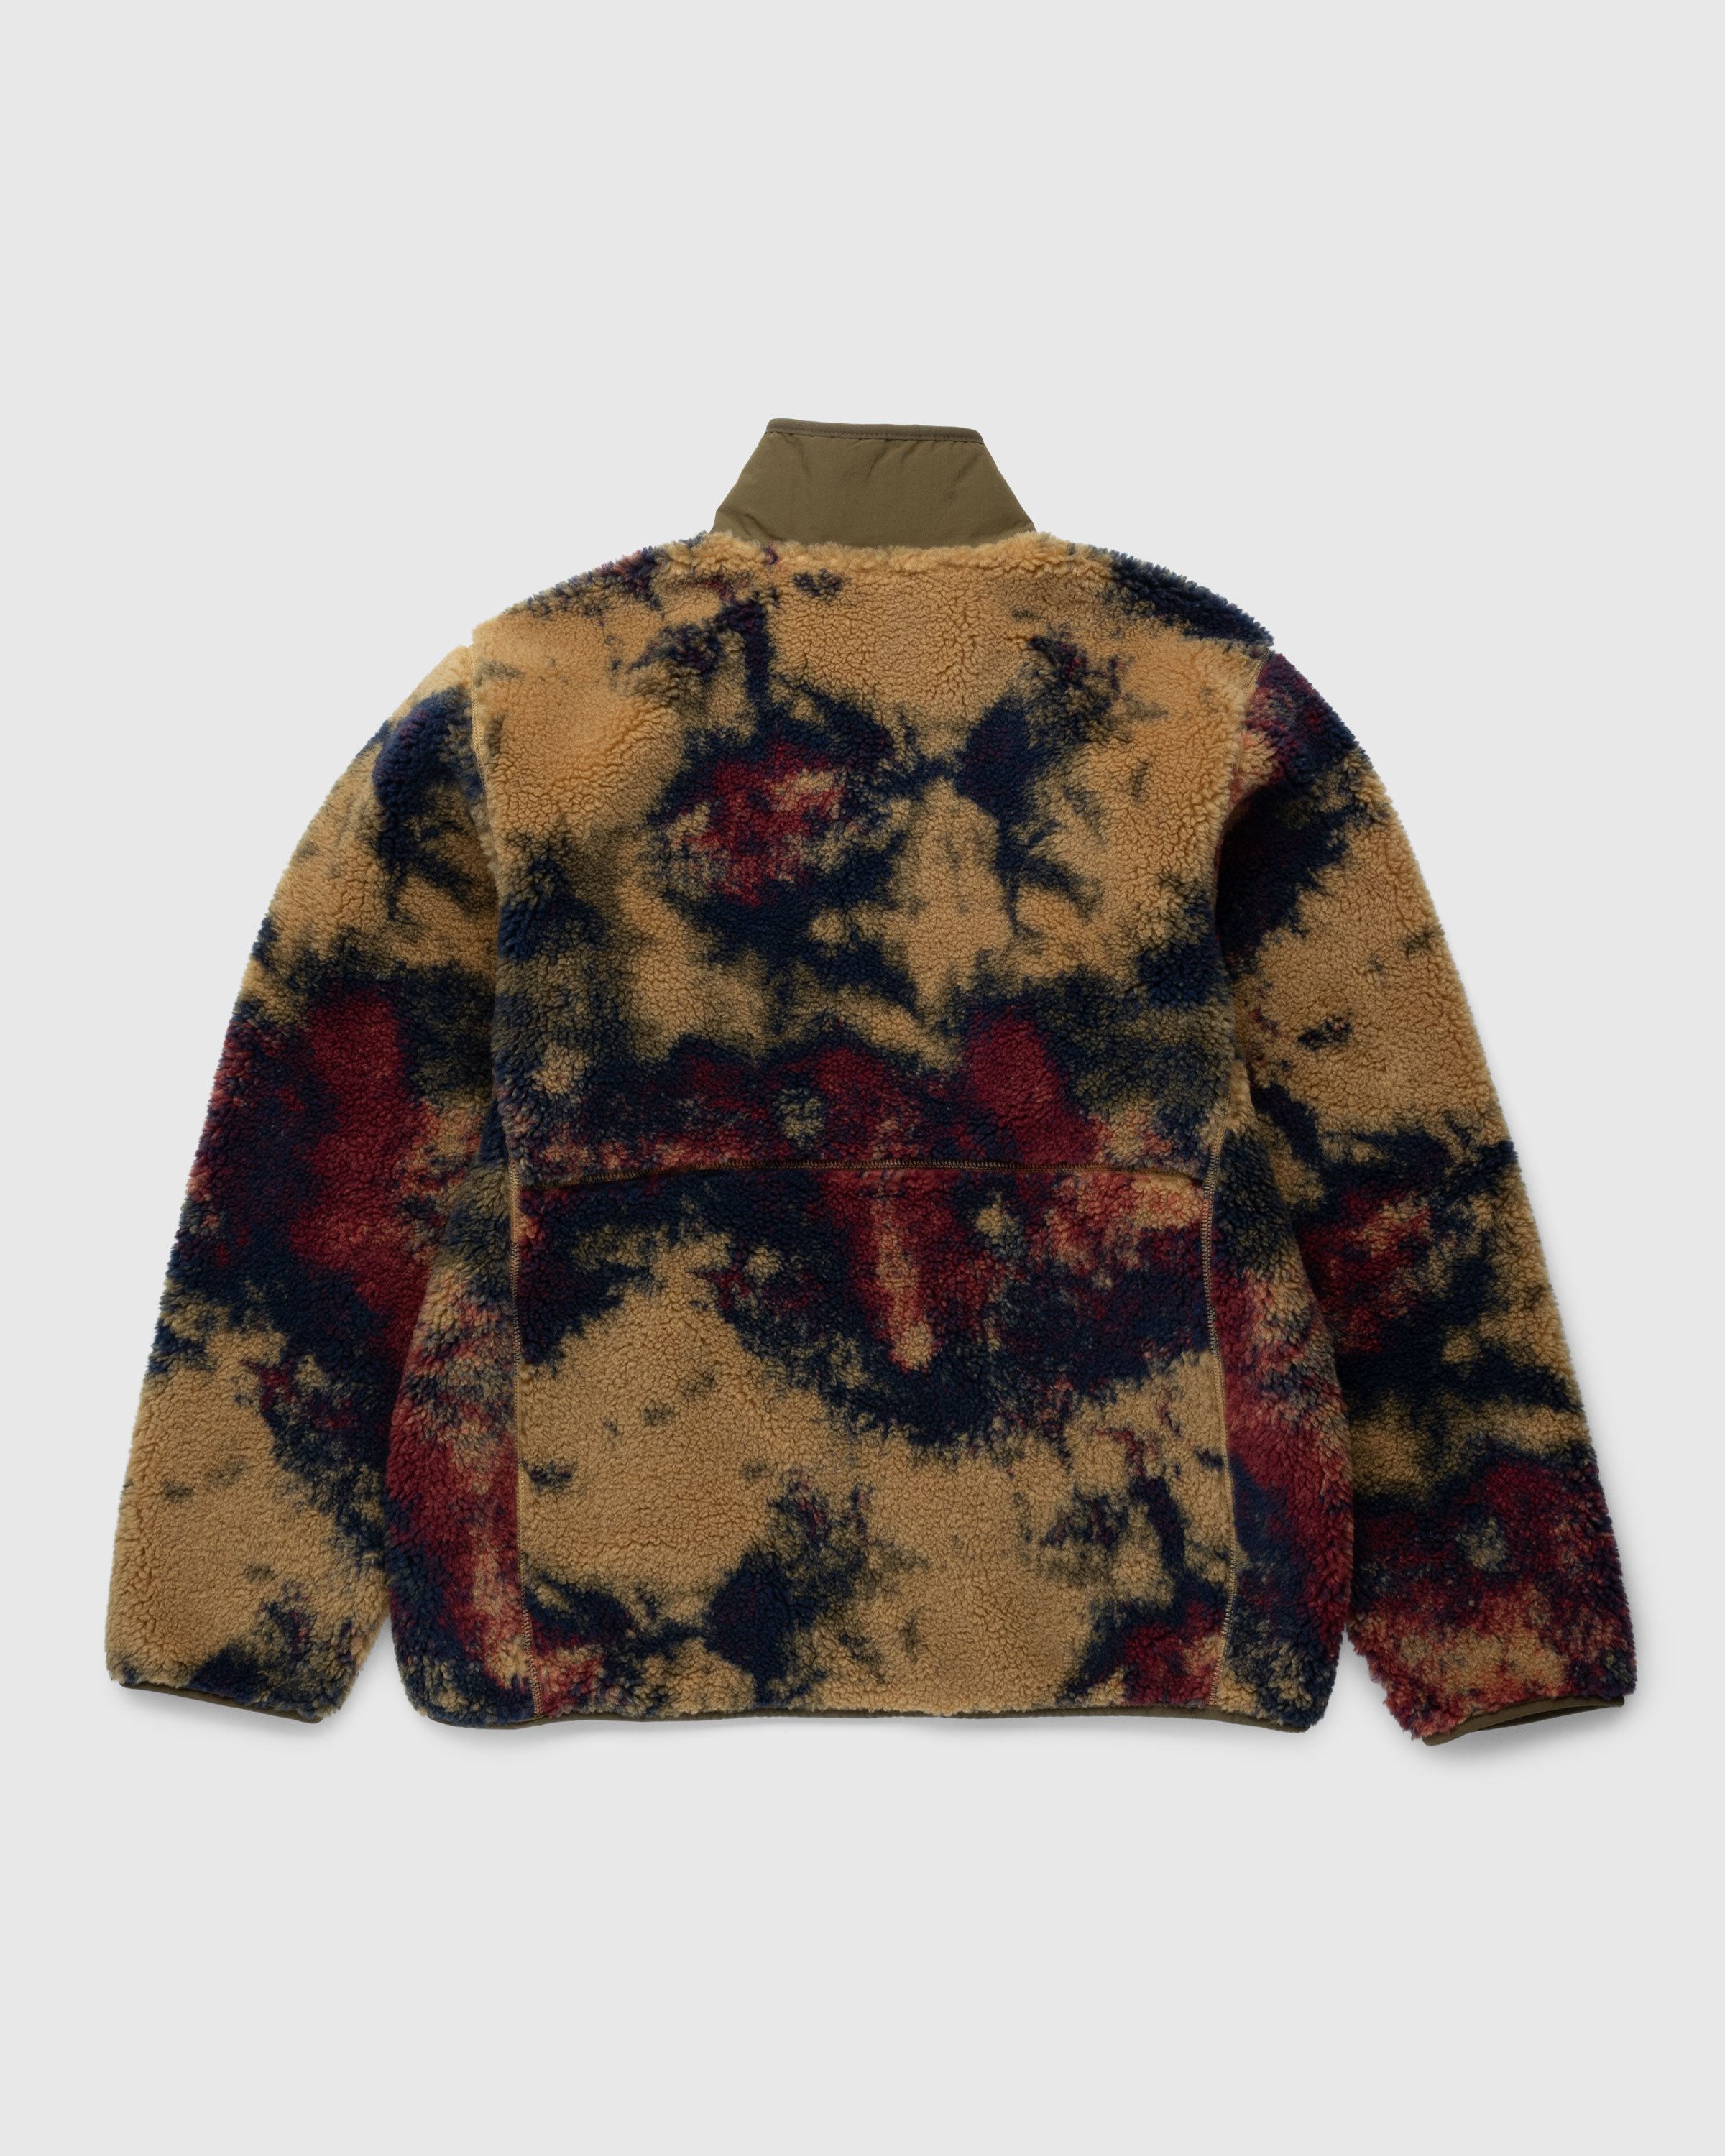 The North Face - Jacquard Extreme Pile Full-Zip Jacket Antelope Tan/Ice Dye Print - Clothing - Multi - Image 2